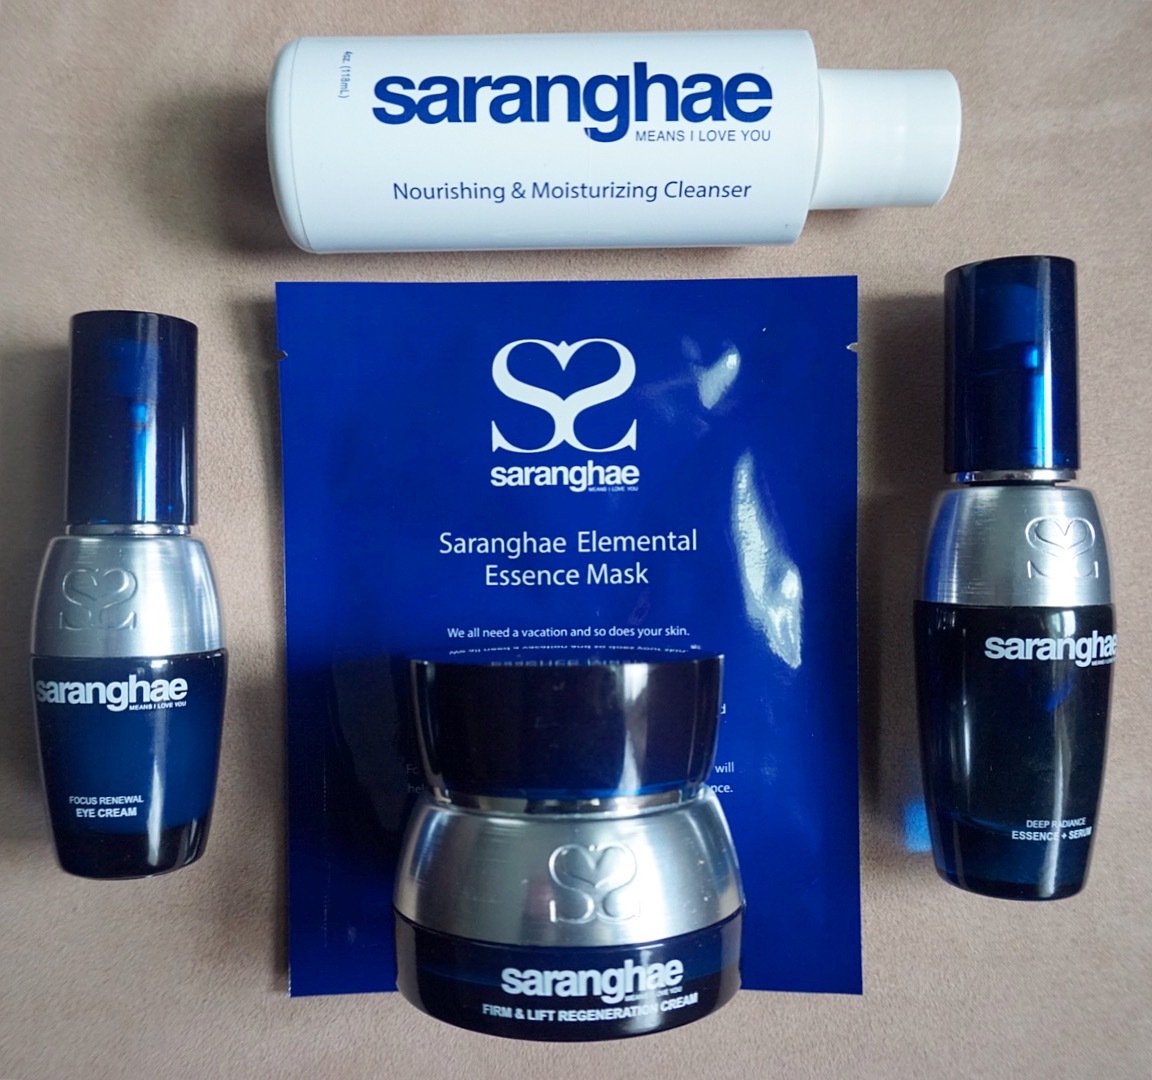 saranghae means i love you